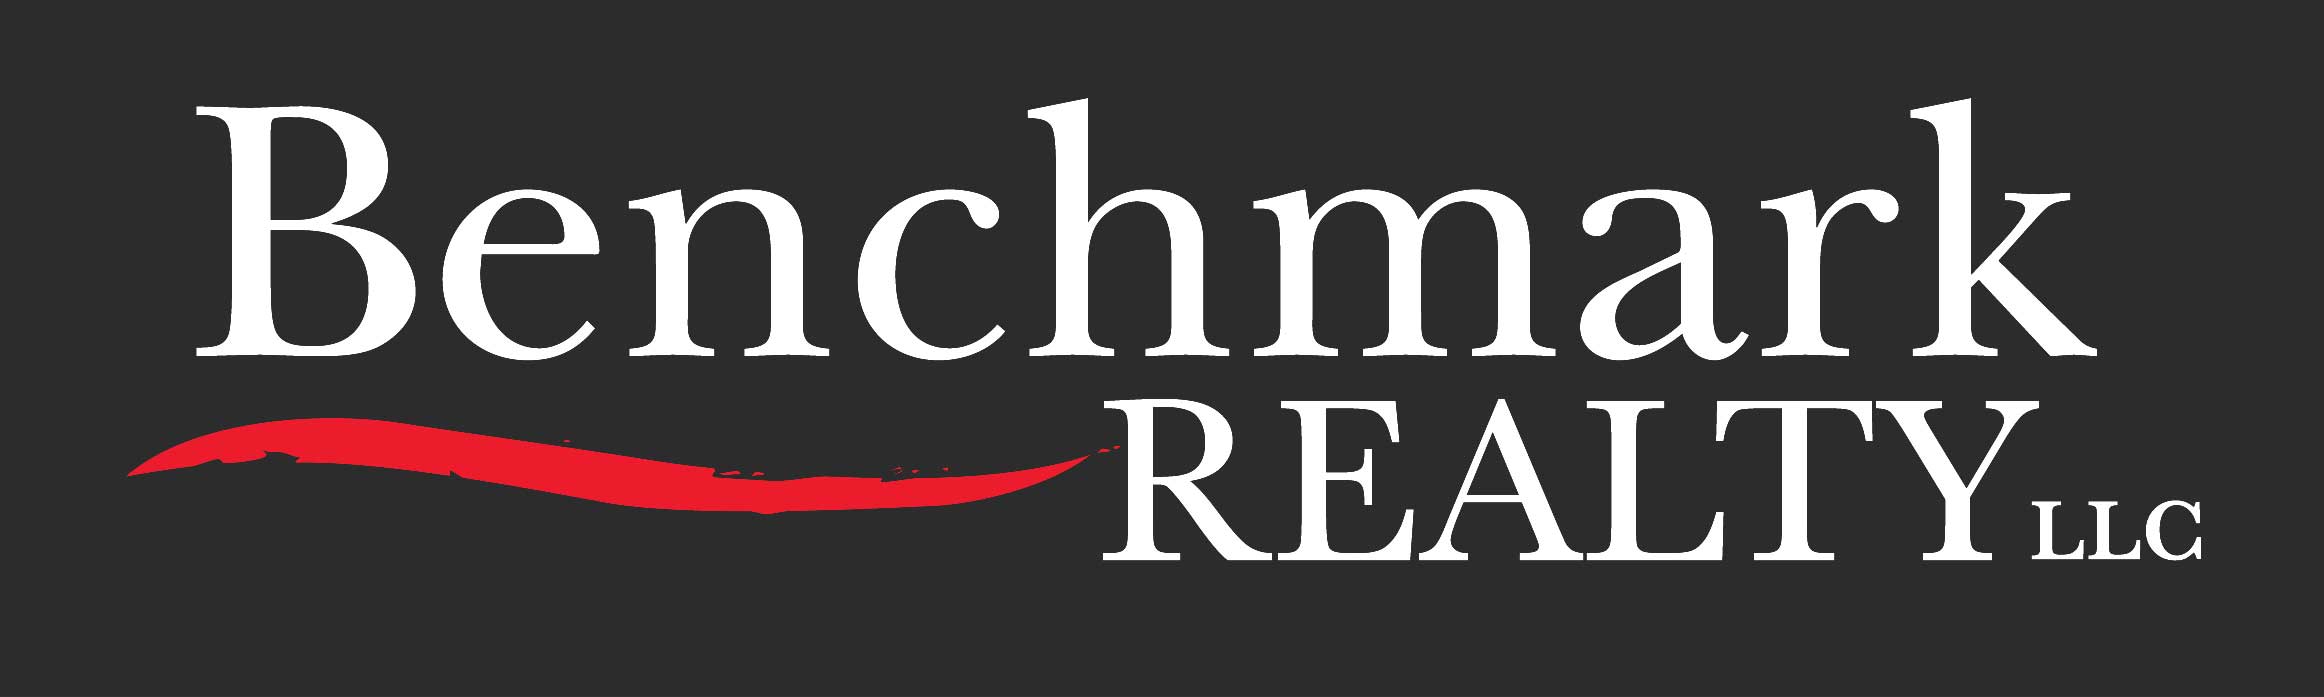 Benchmark Realty, LLC 